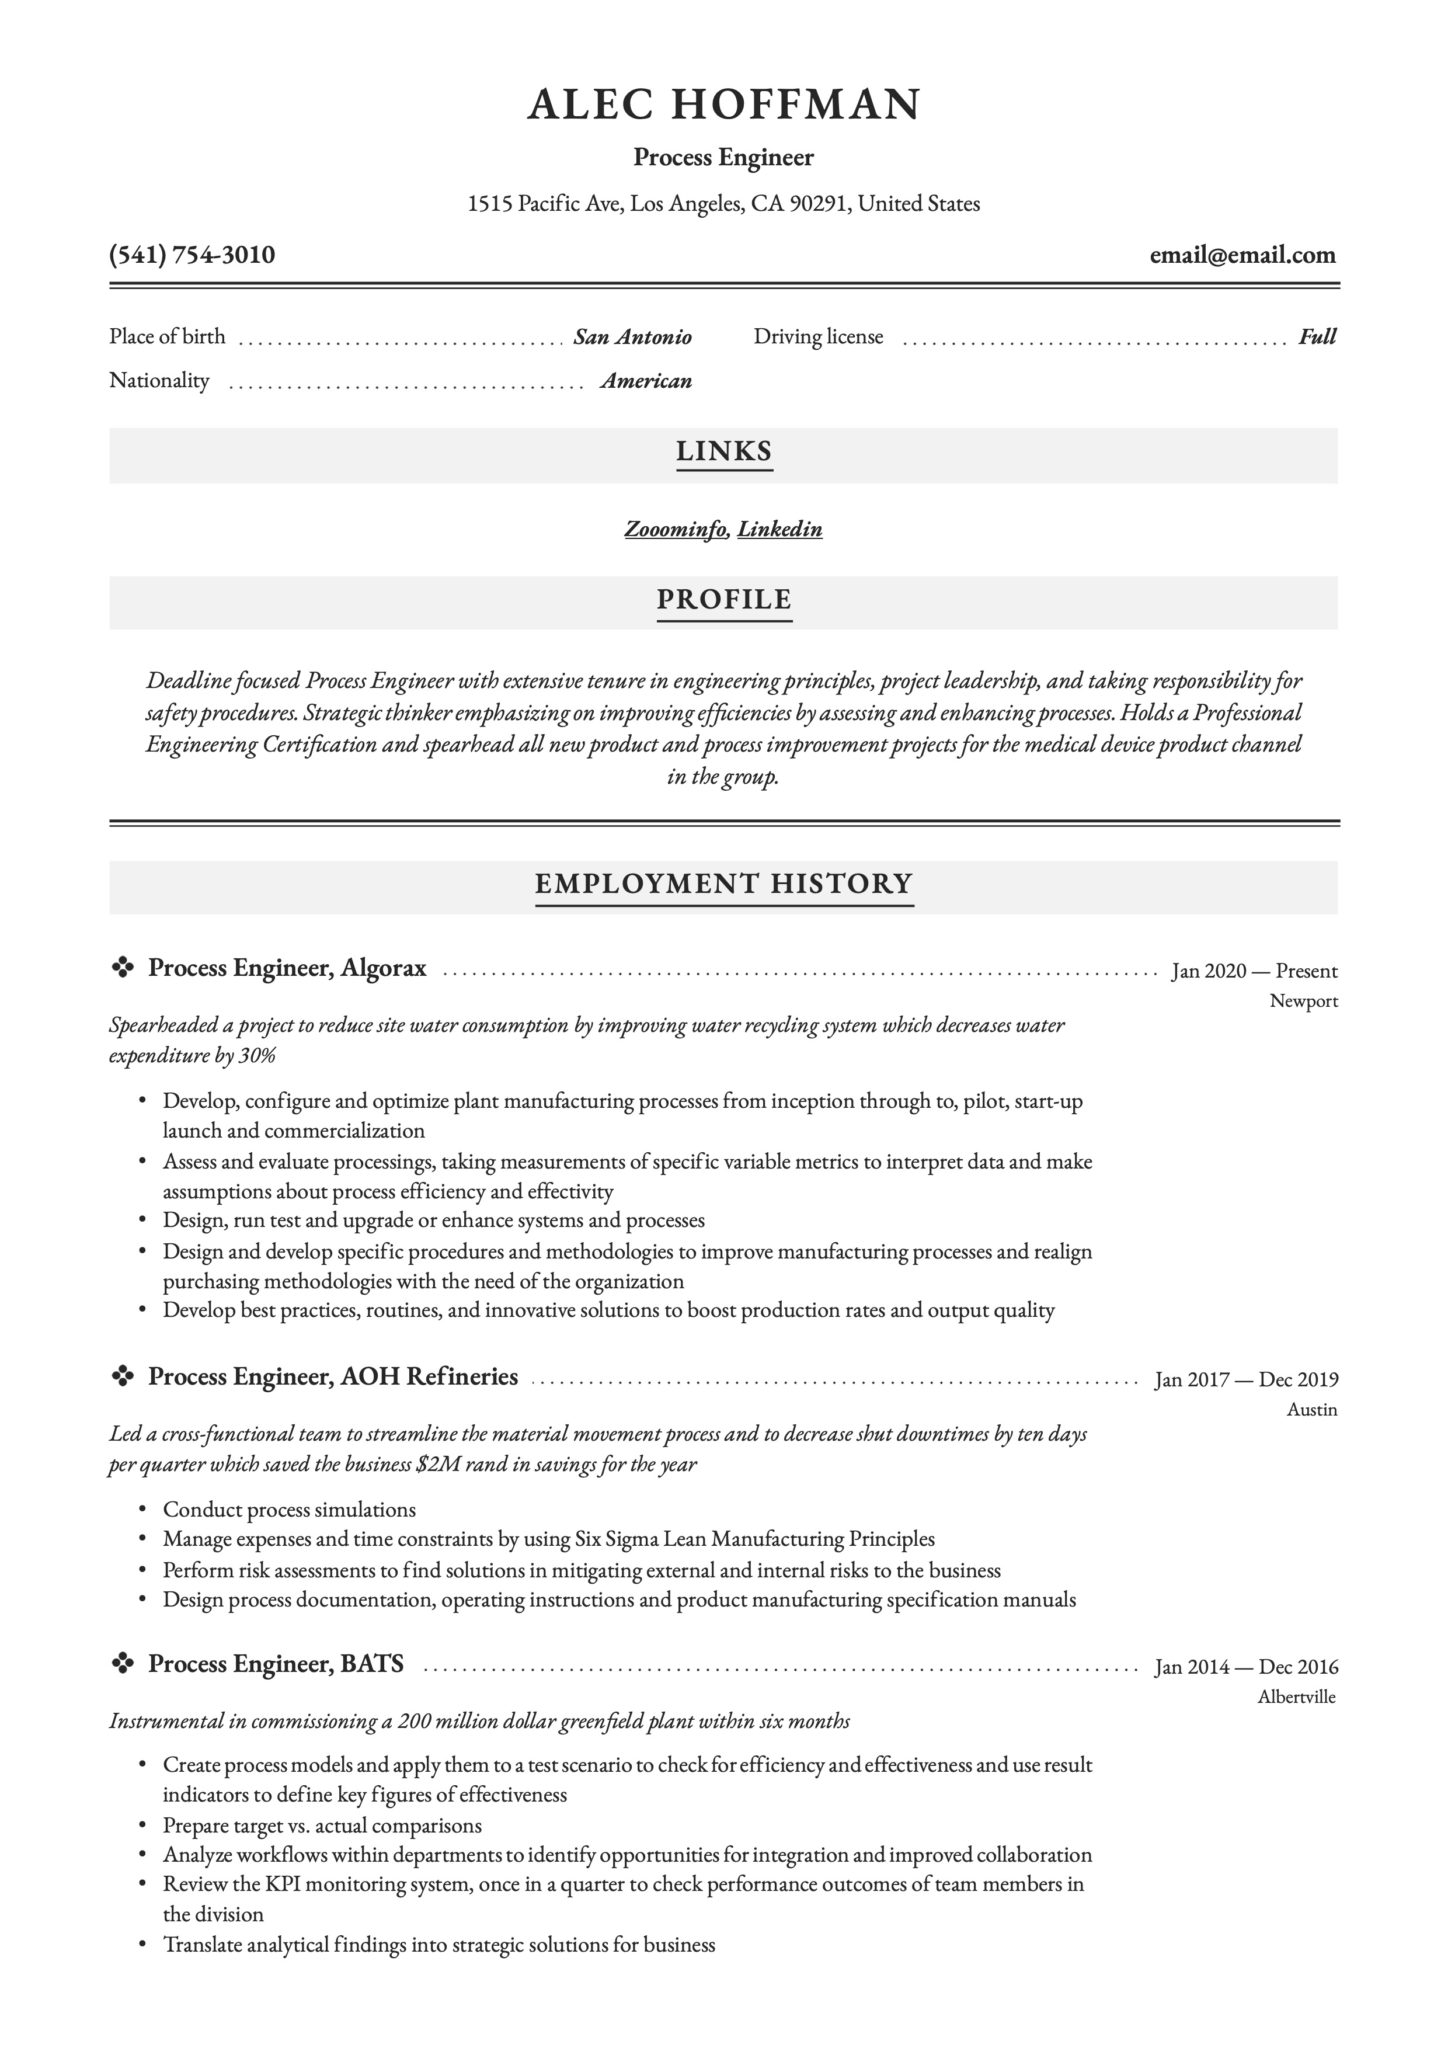 Professional Resume Example Process Engineer